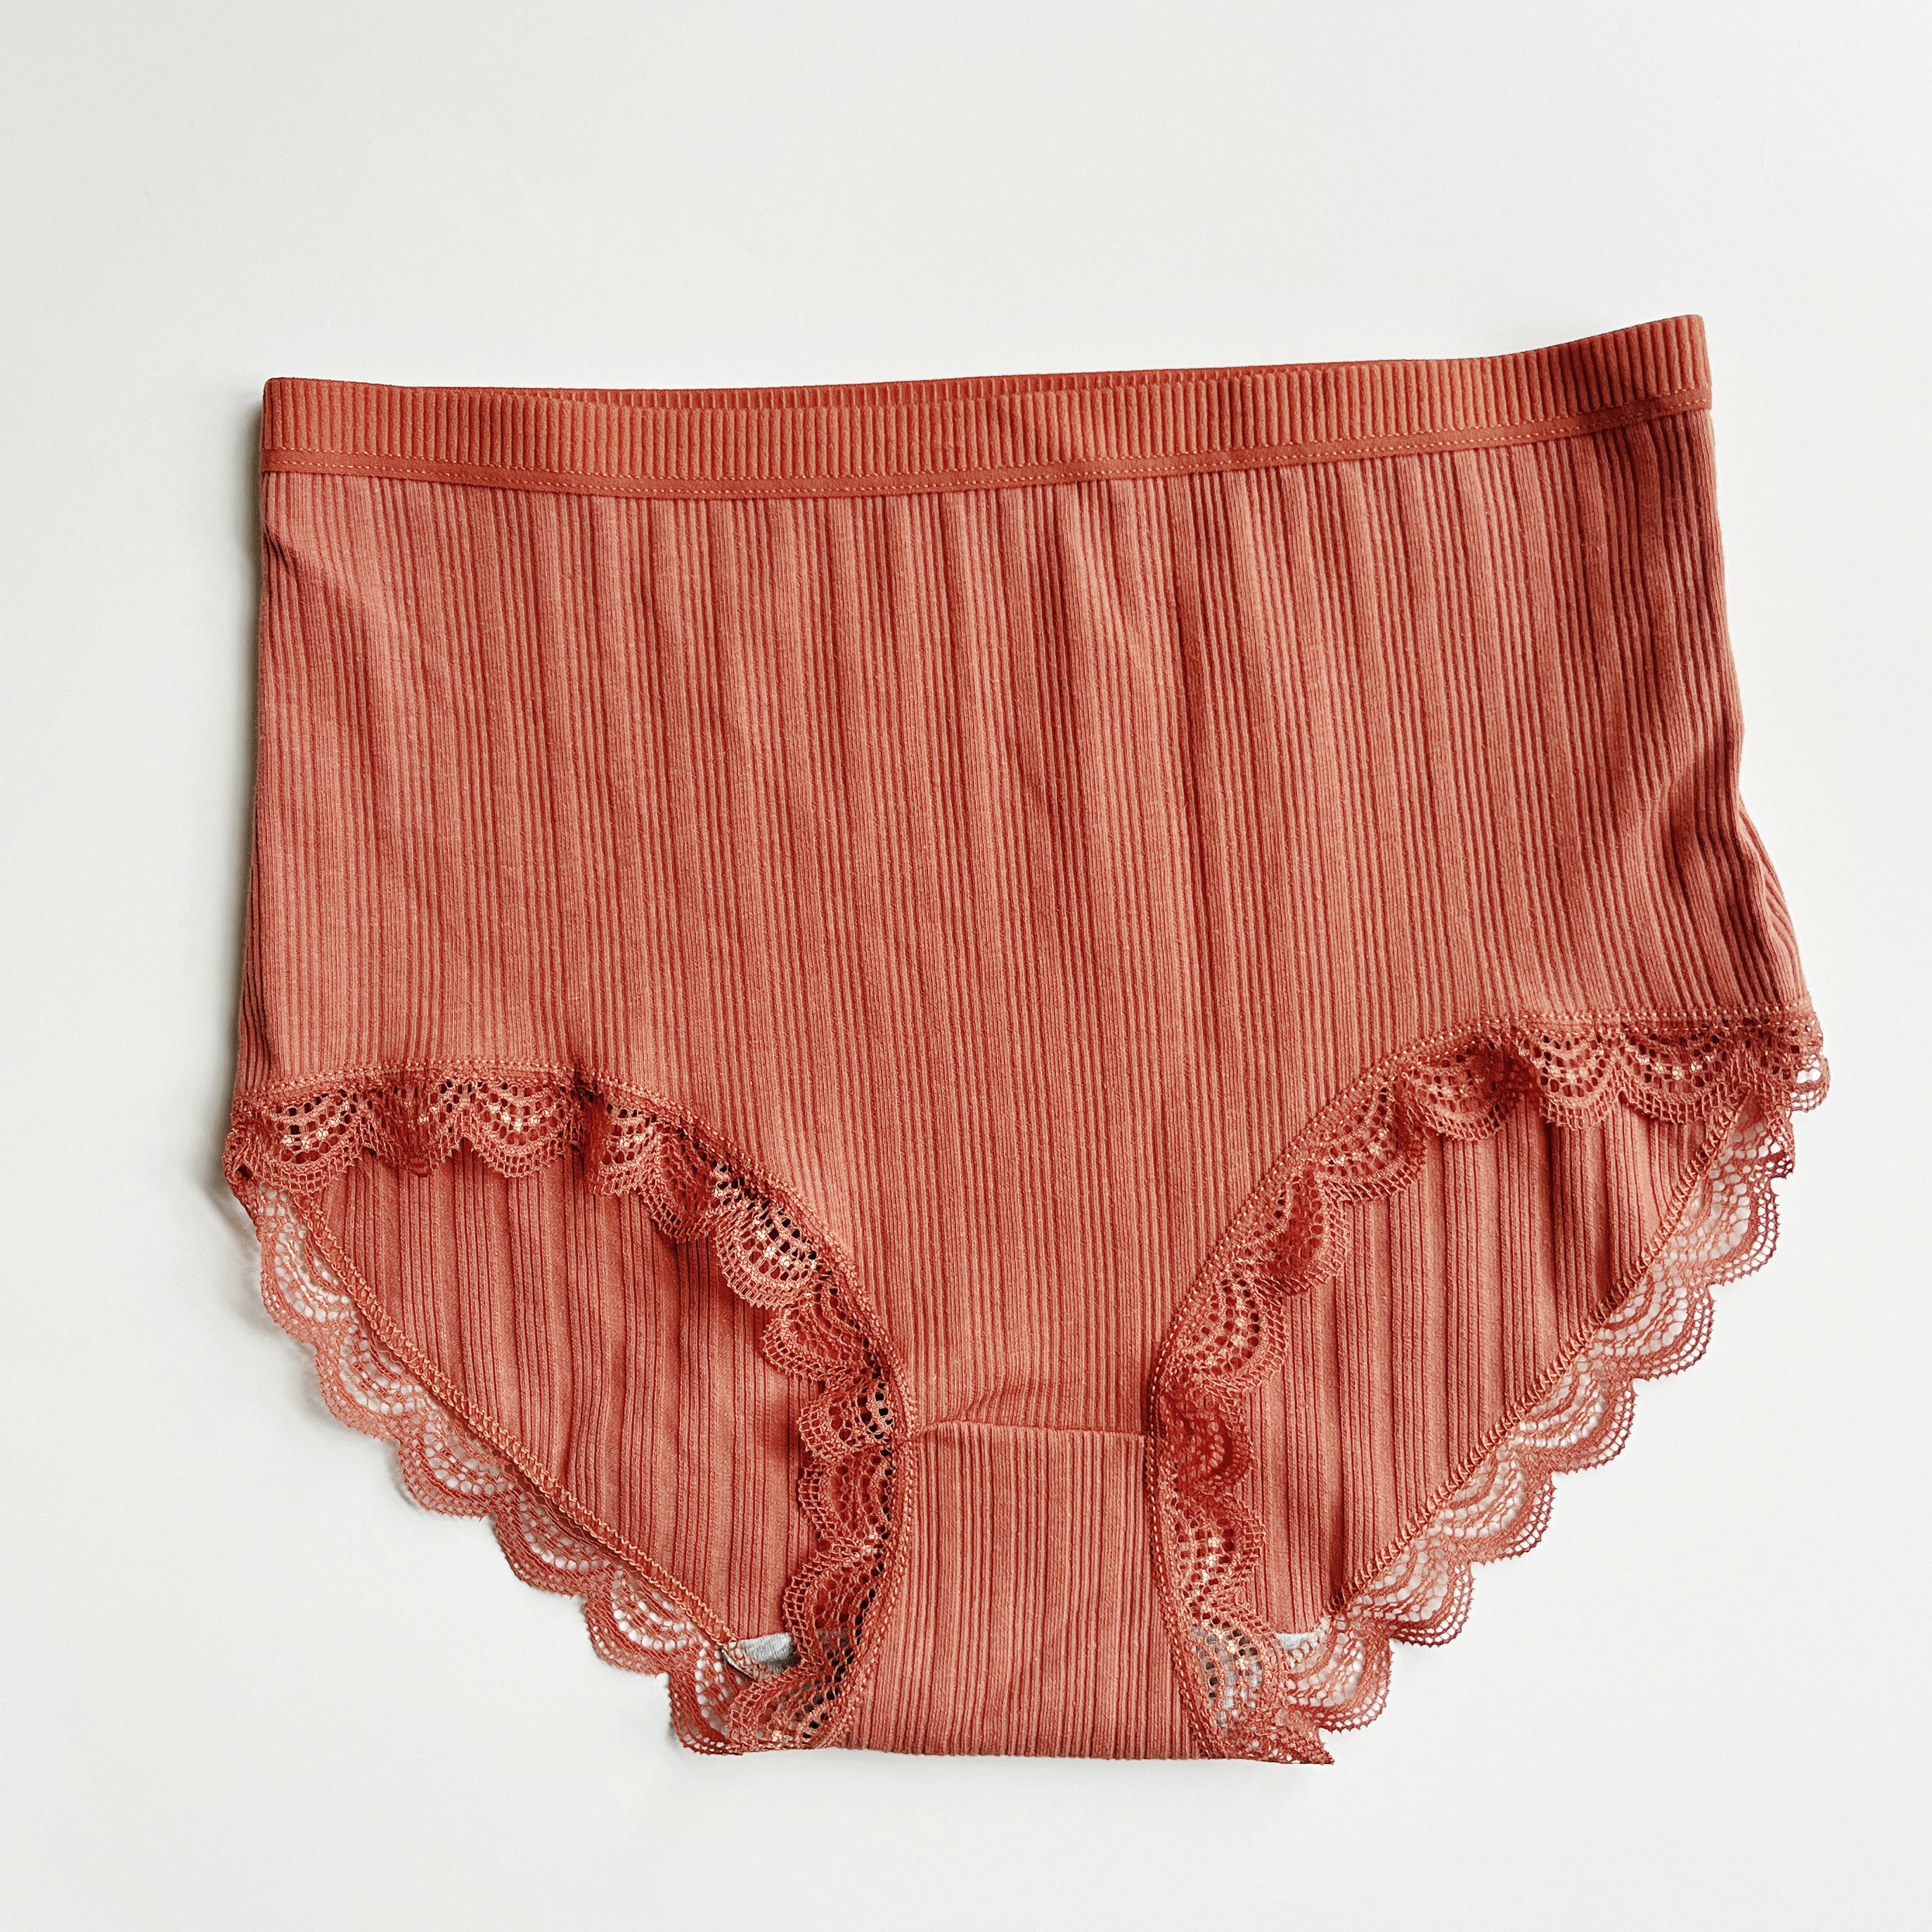 OEM Brand Cotton Spandex Ladies Underwear with Factory Price